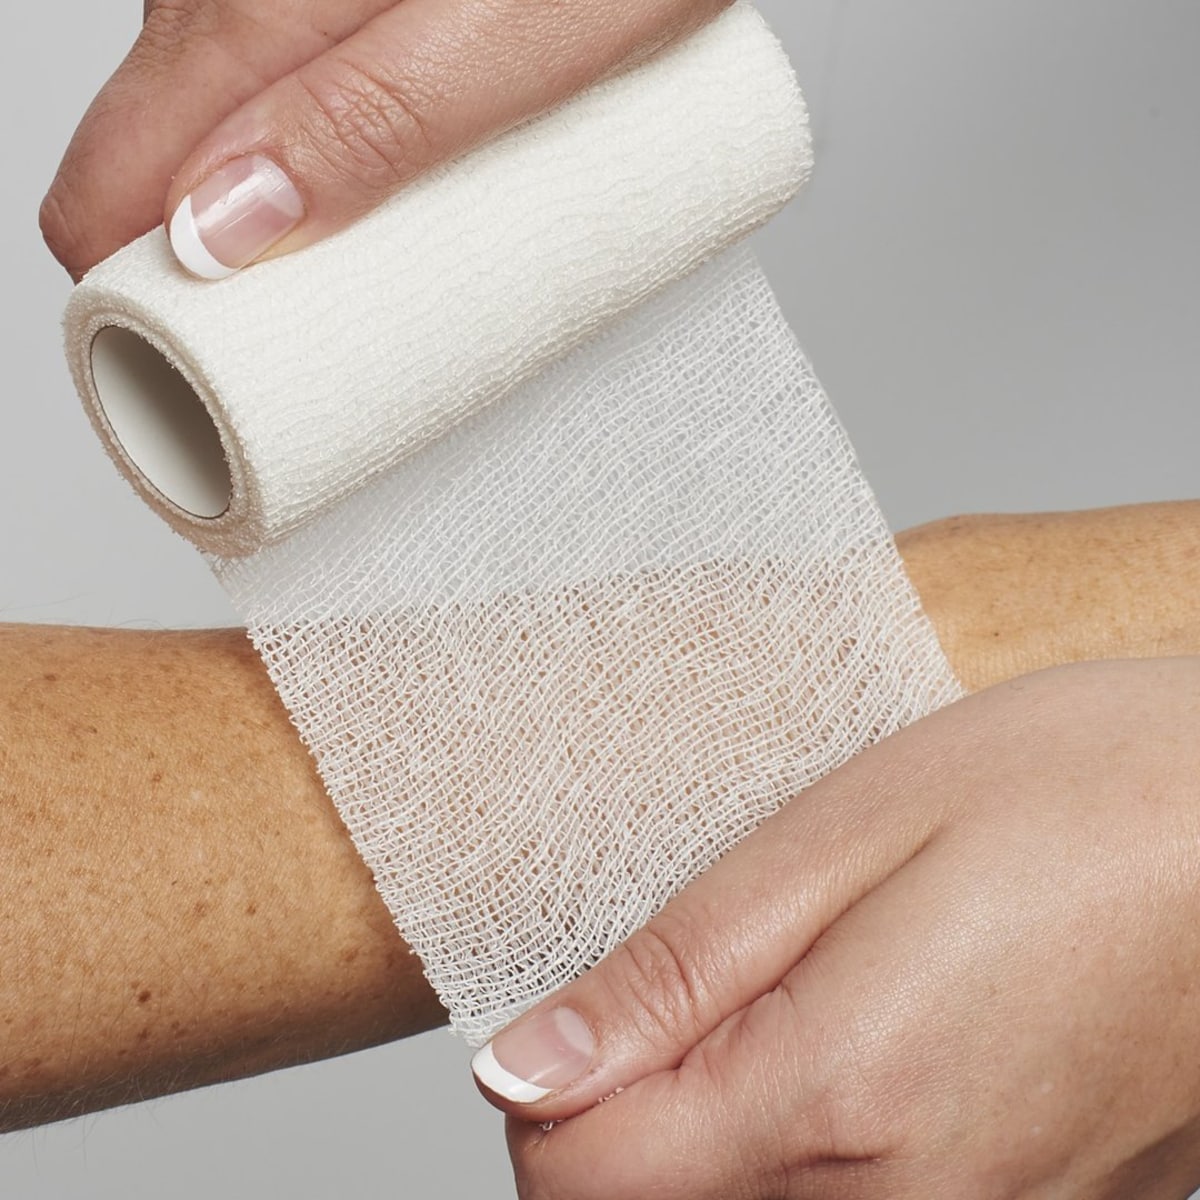 Primagauze Elastic Cohesive Bandage 6cm x 2m 1 Roll by Smith & Nephew